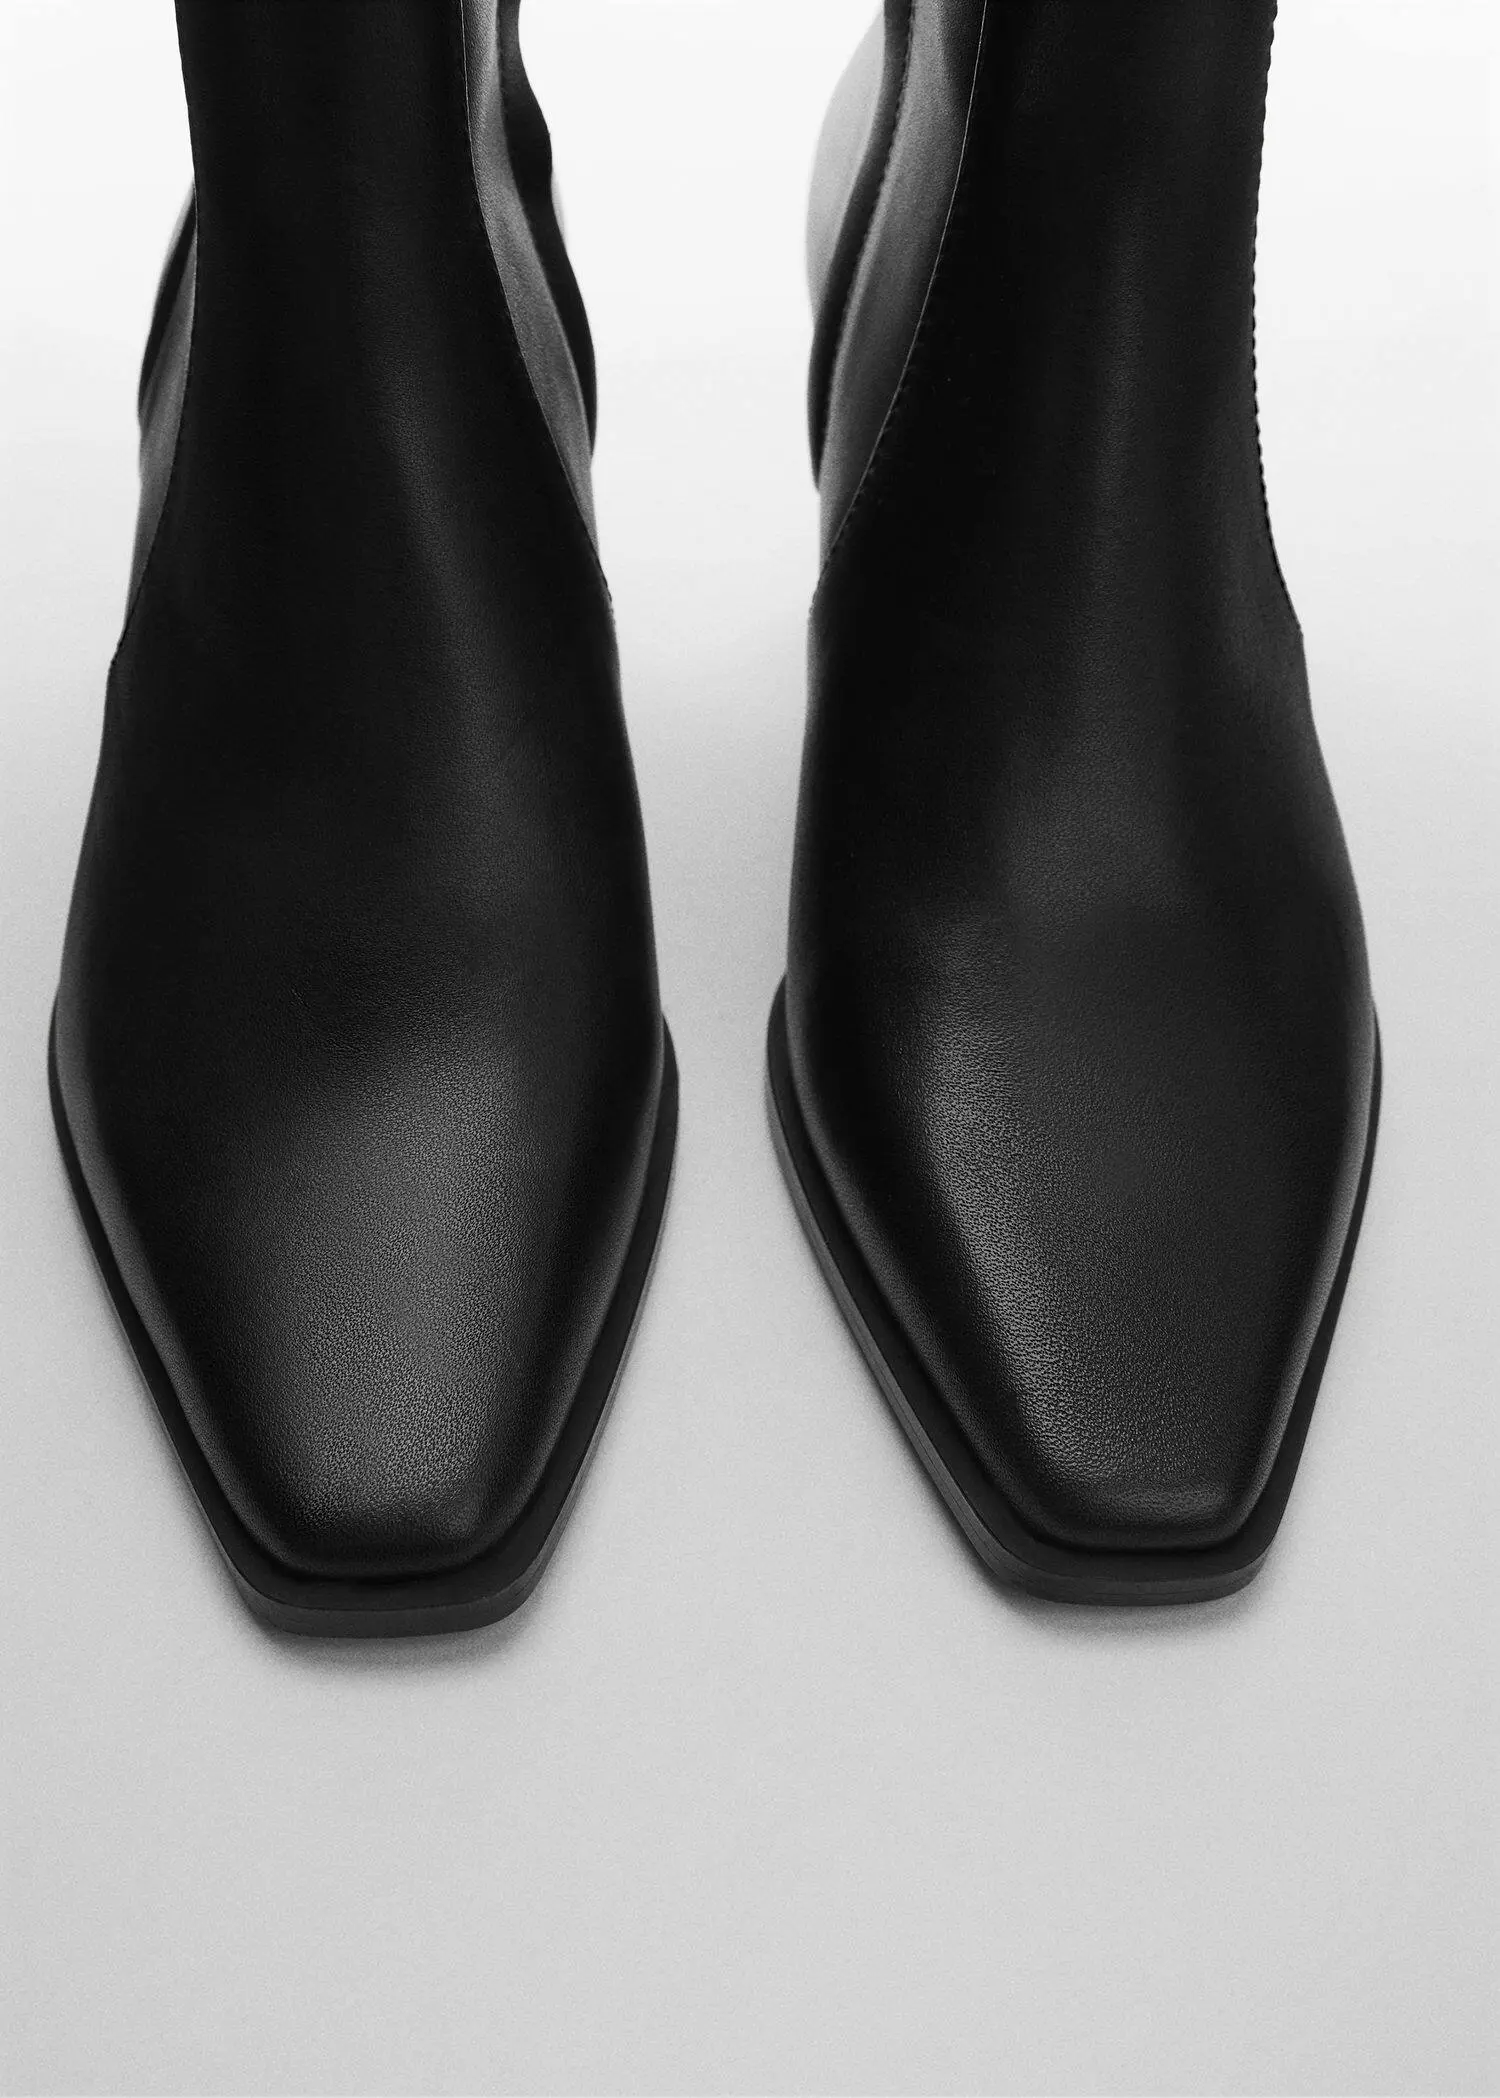 Mango Heel leather ankle boot. 3